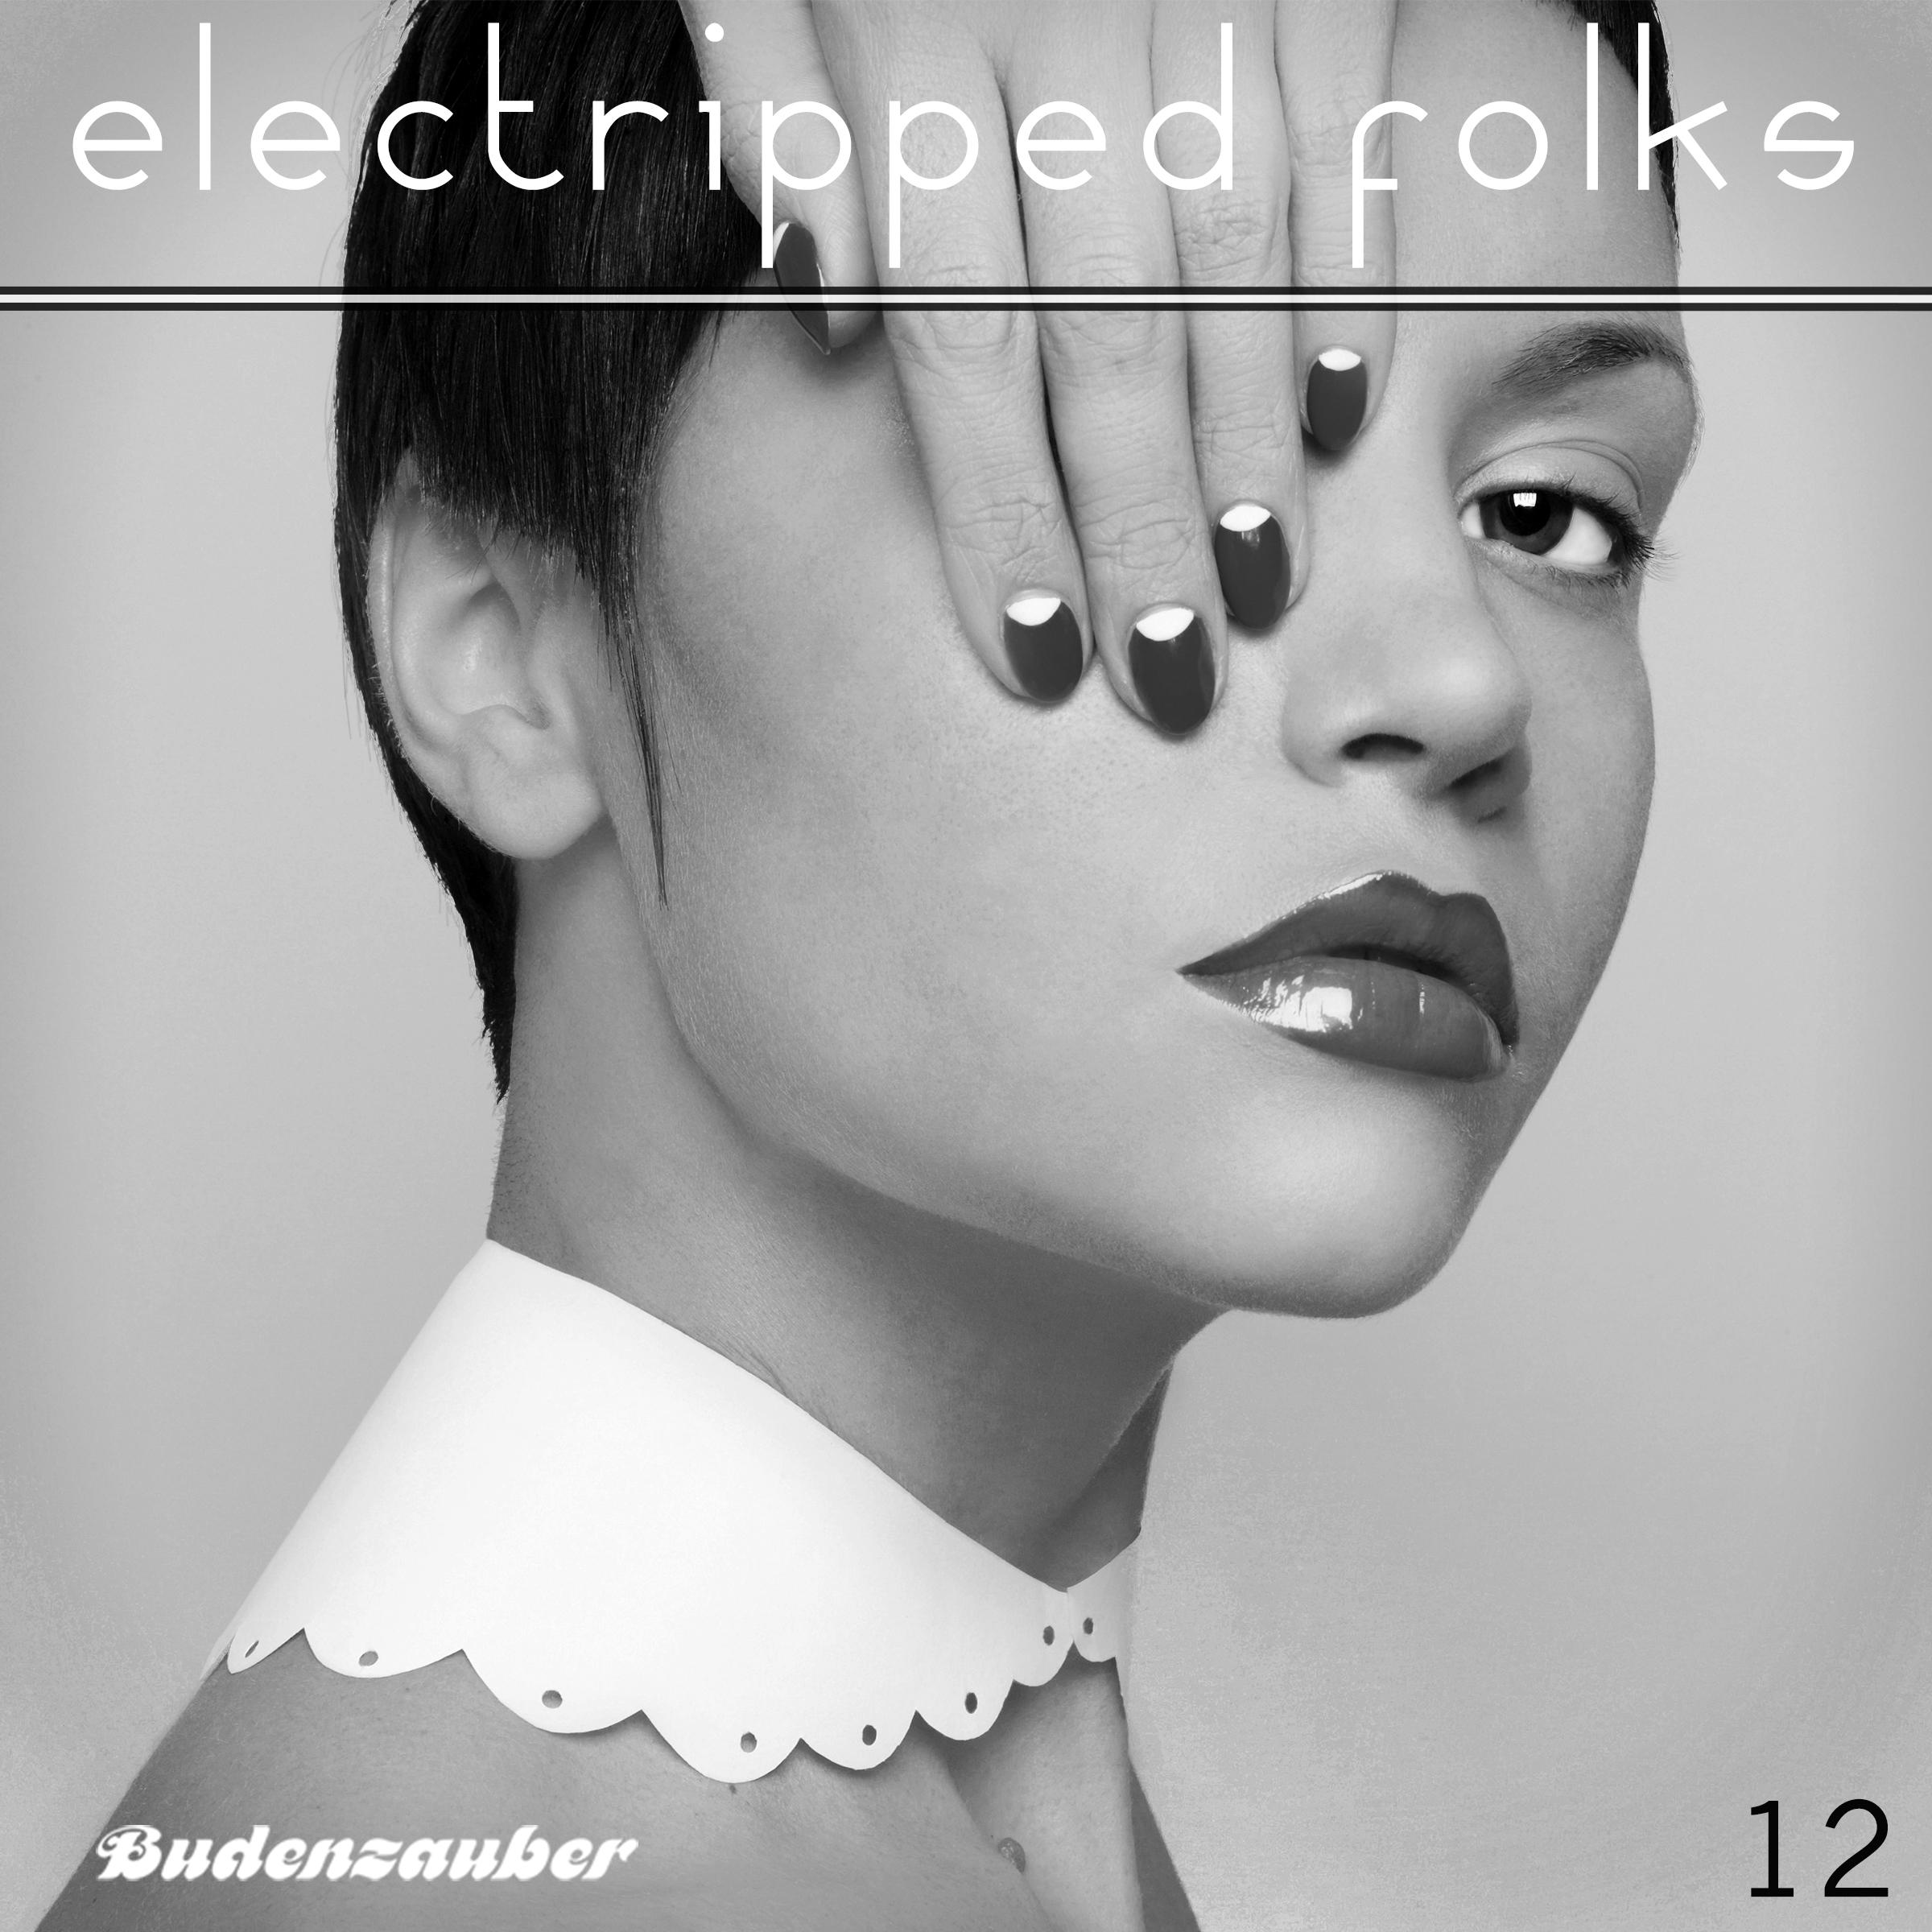 Electripped Folks, 12